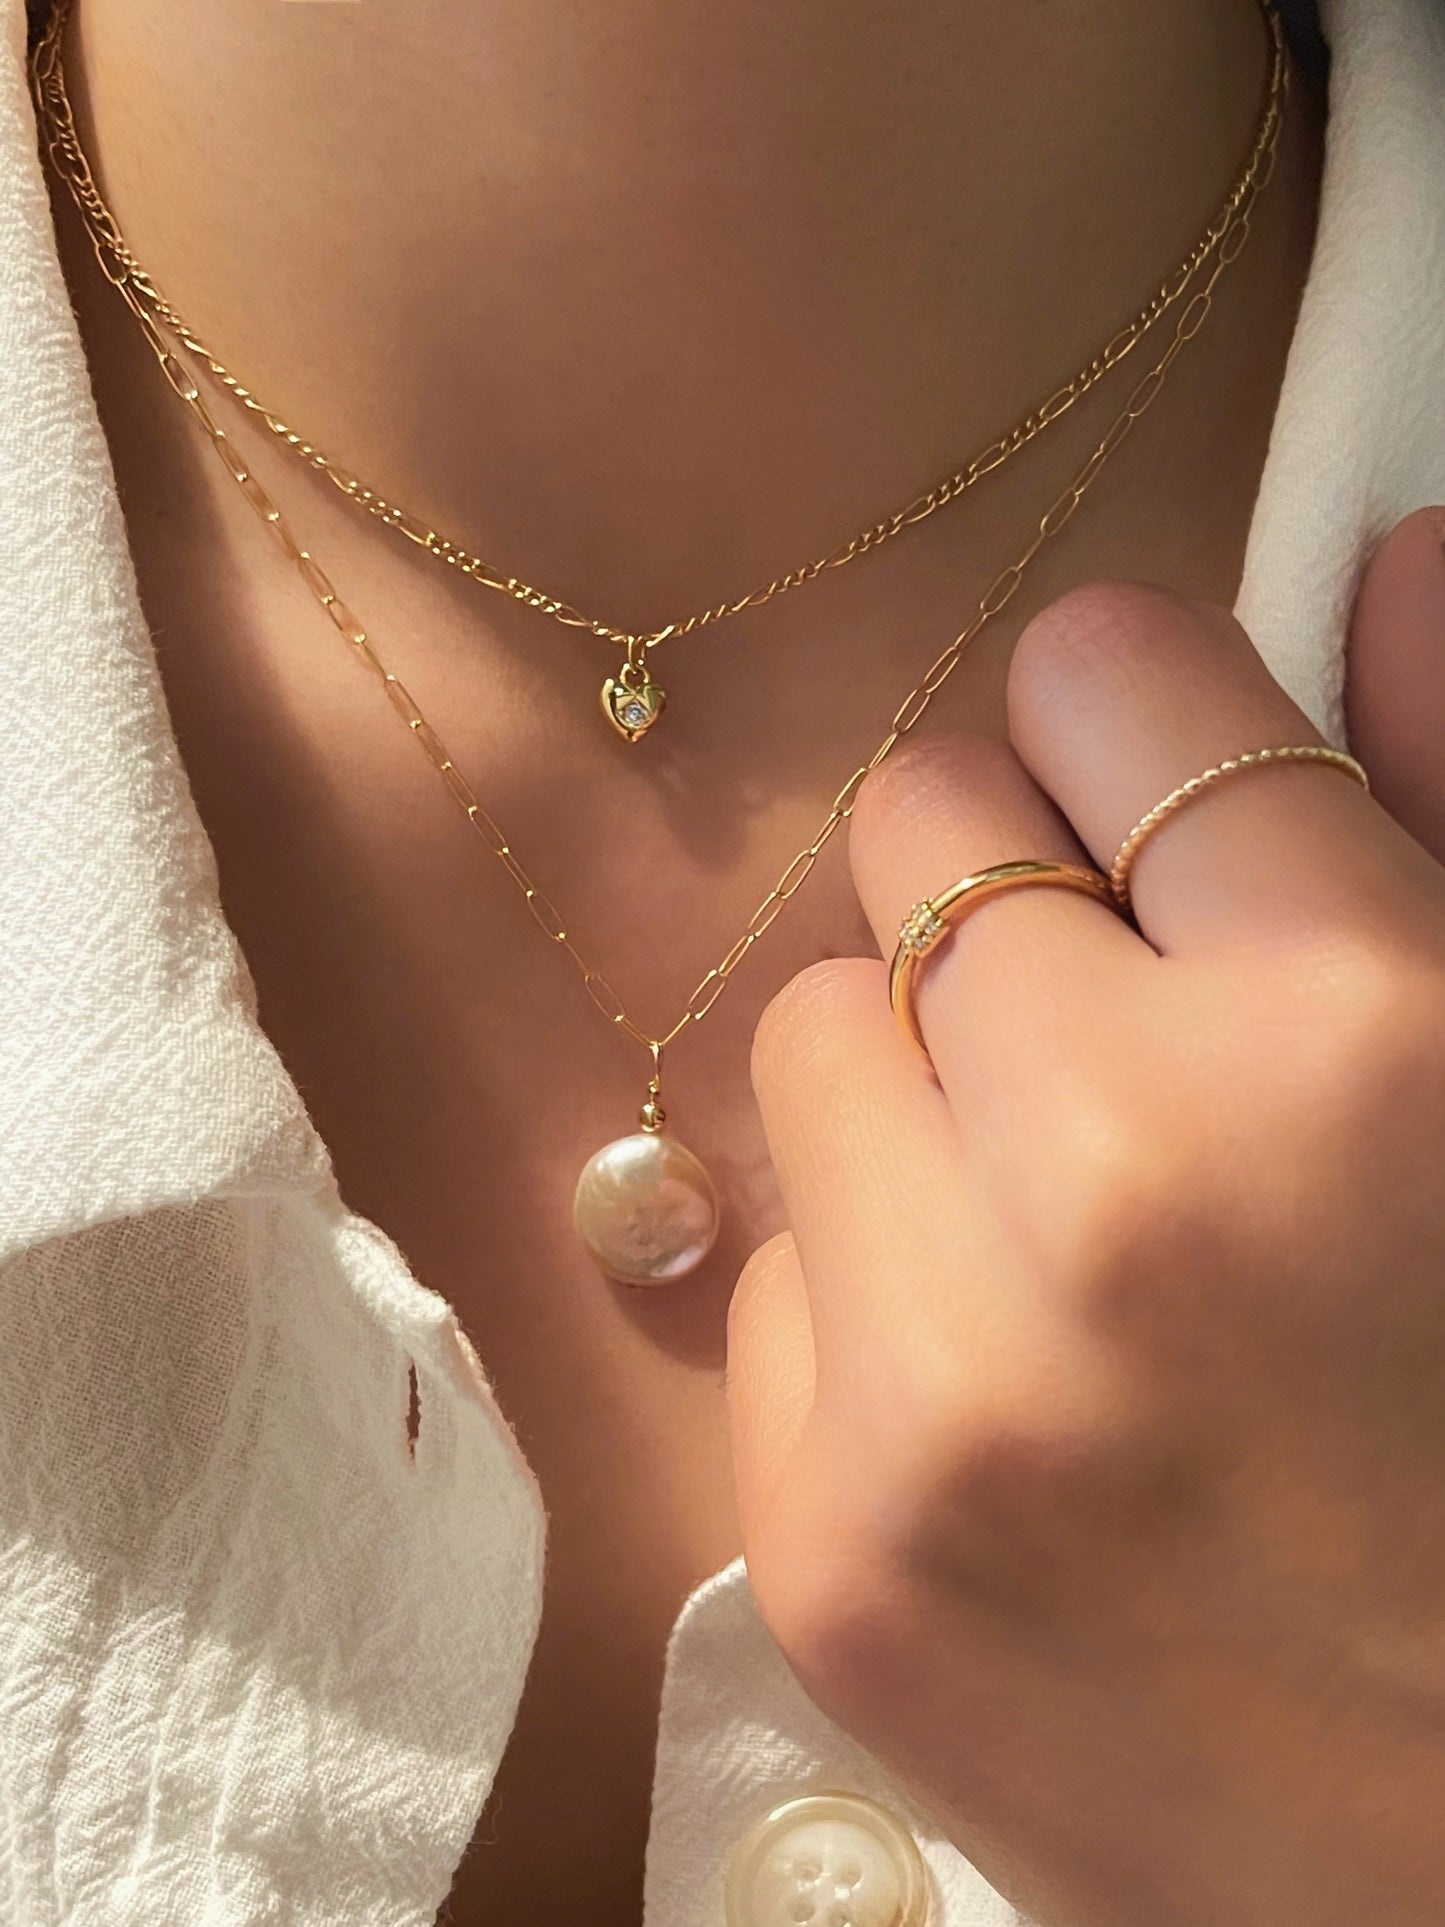 ILOVEU gold heart necklace